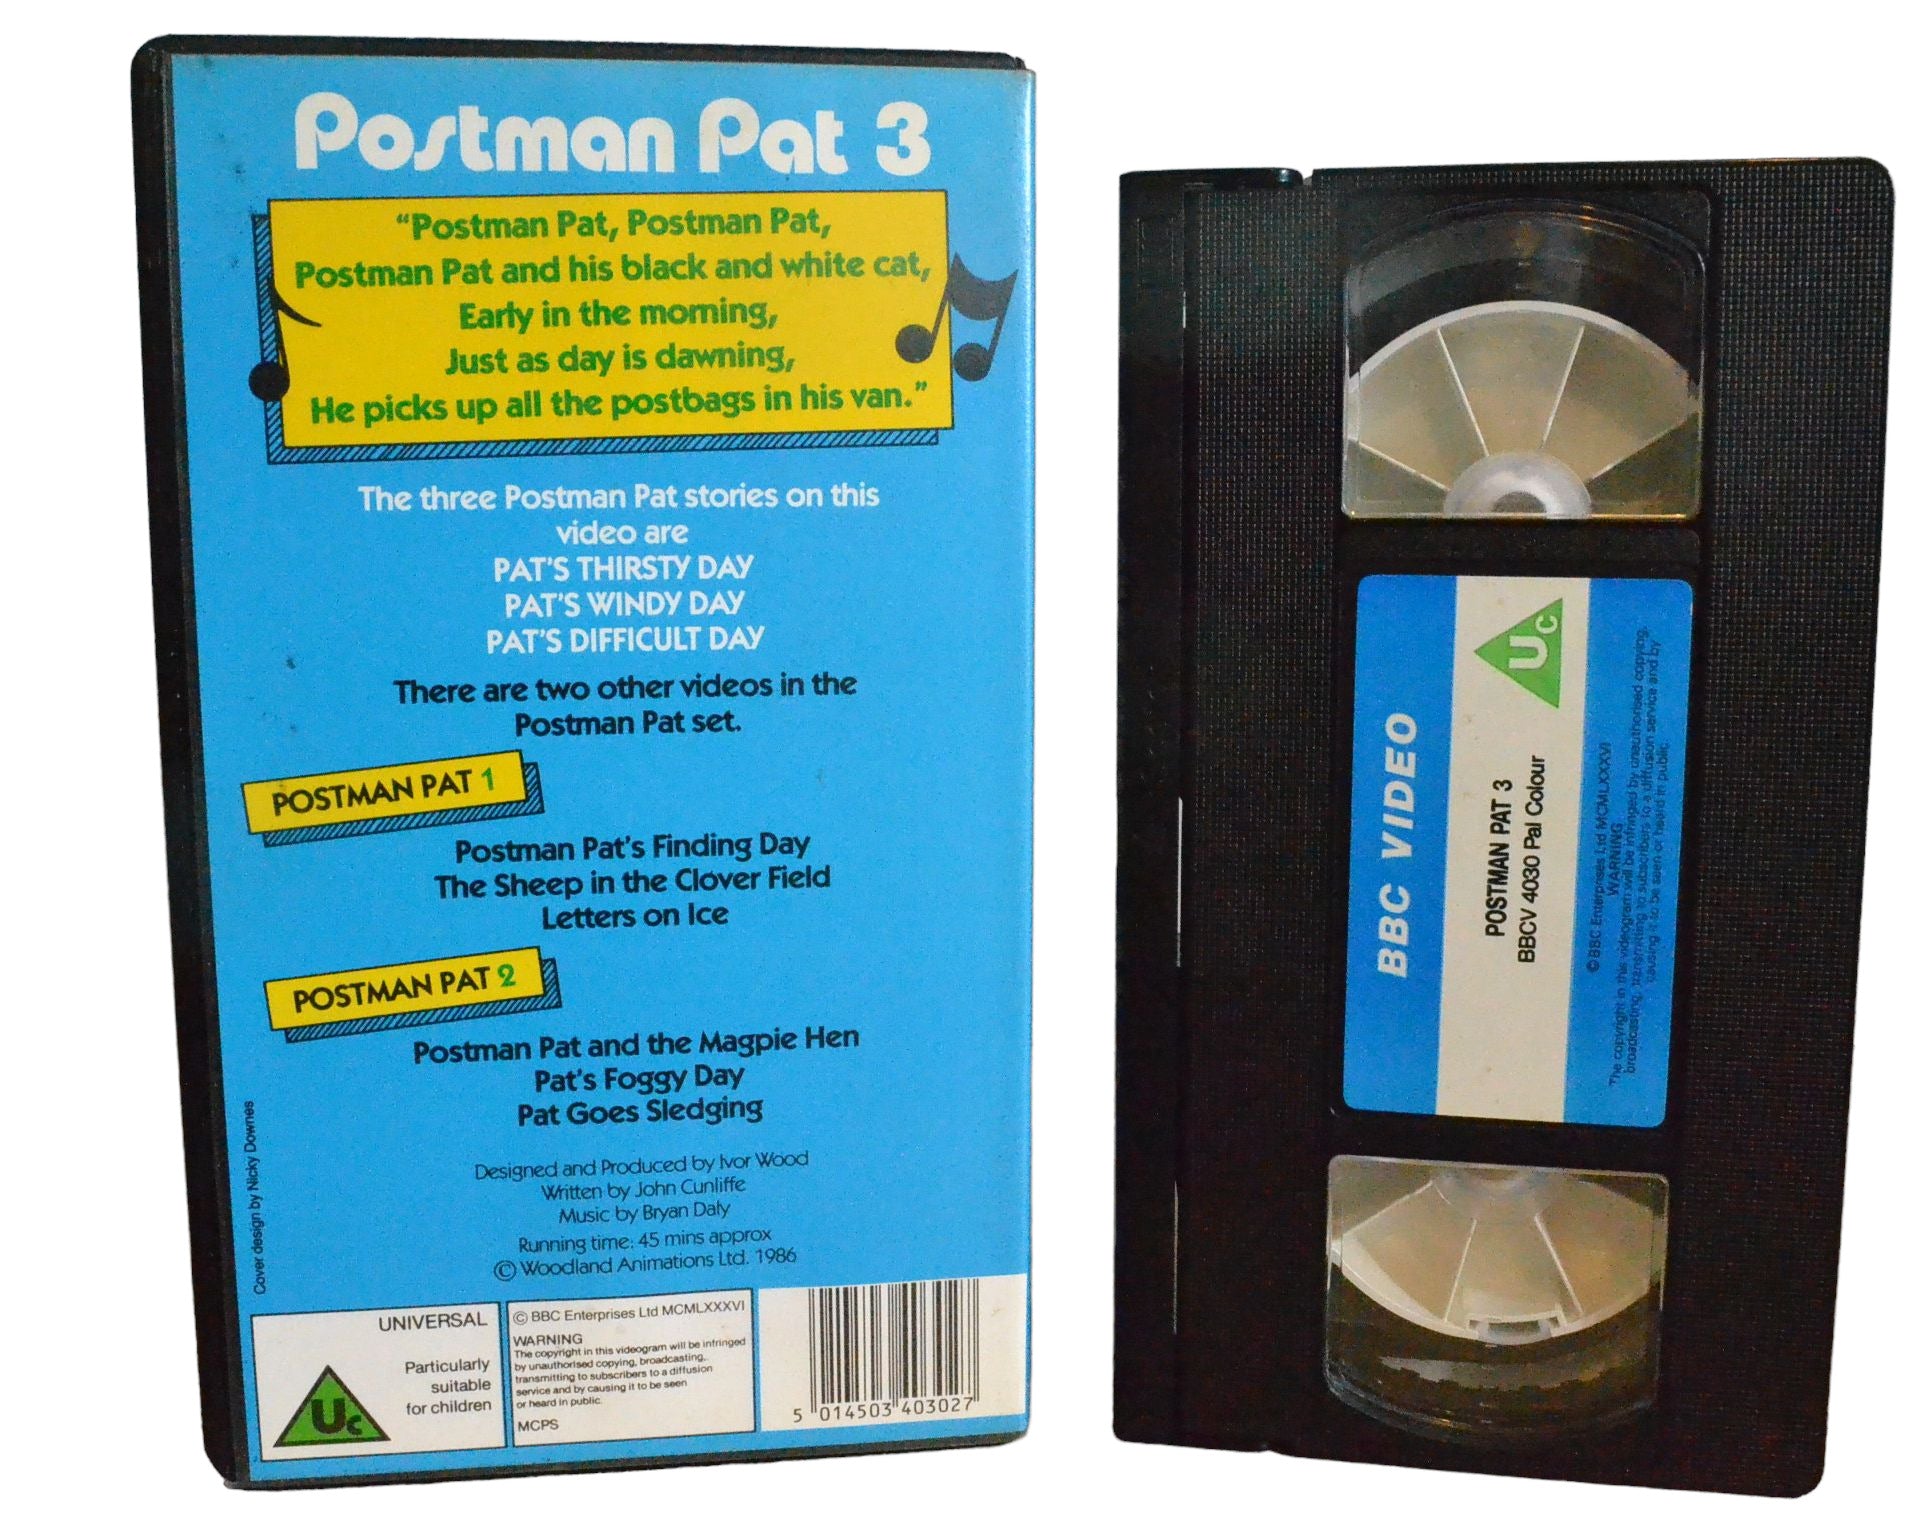 Postman Pat 3 (Pat's Windy Day) - BBC Video - BBCV4030 - Children - Pal - VHS-